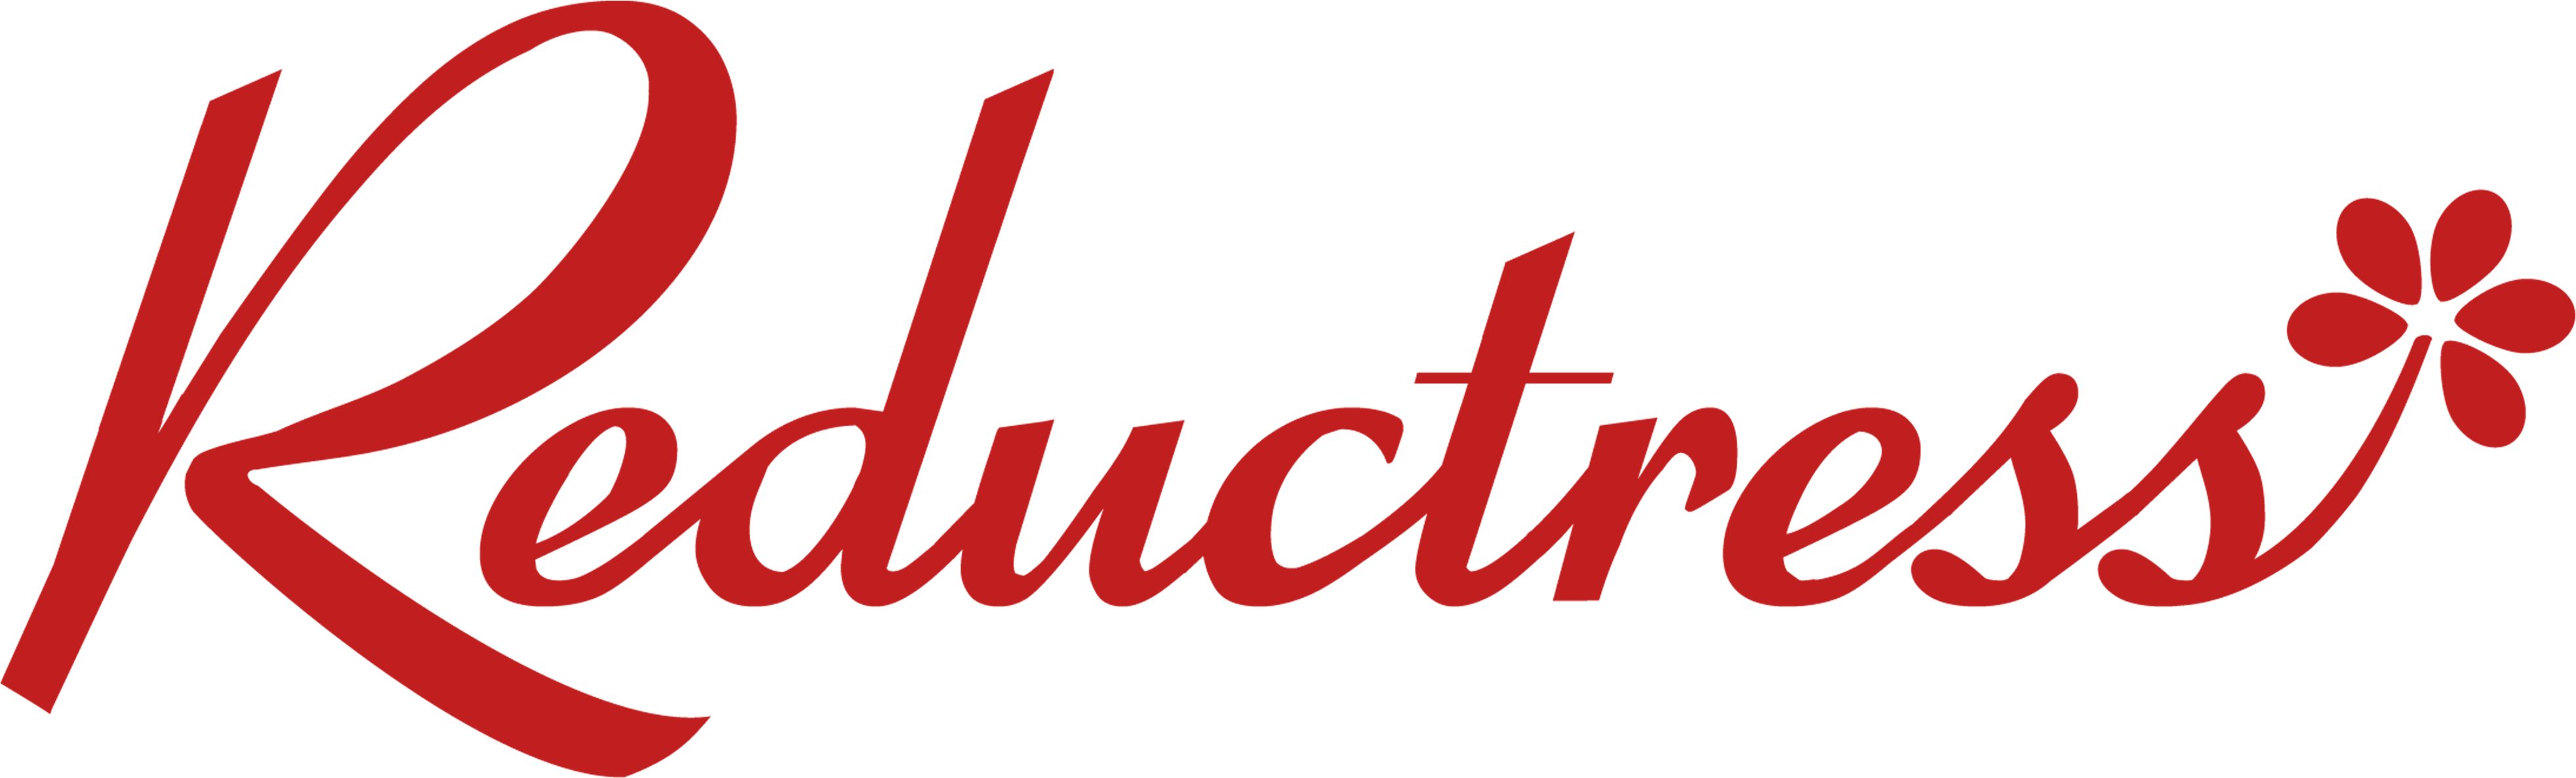 Reductress Logo Redon Gray PNG